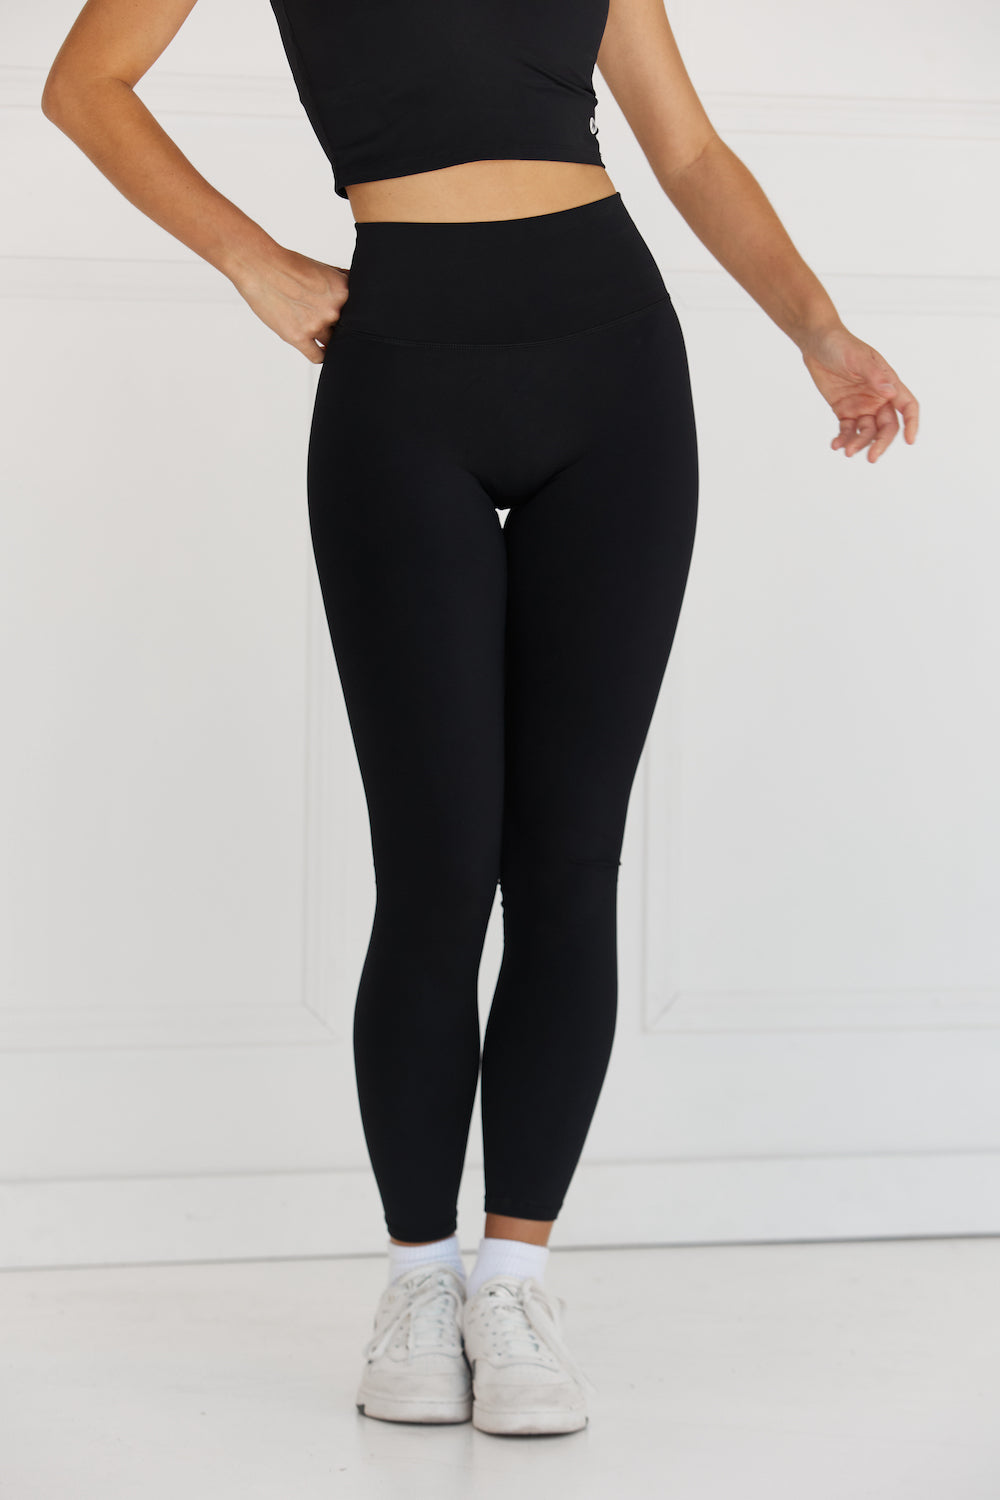 Astoria Activewear Astoria LUXE BALANCE Full Length Legging - Black on  Marmalade